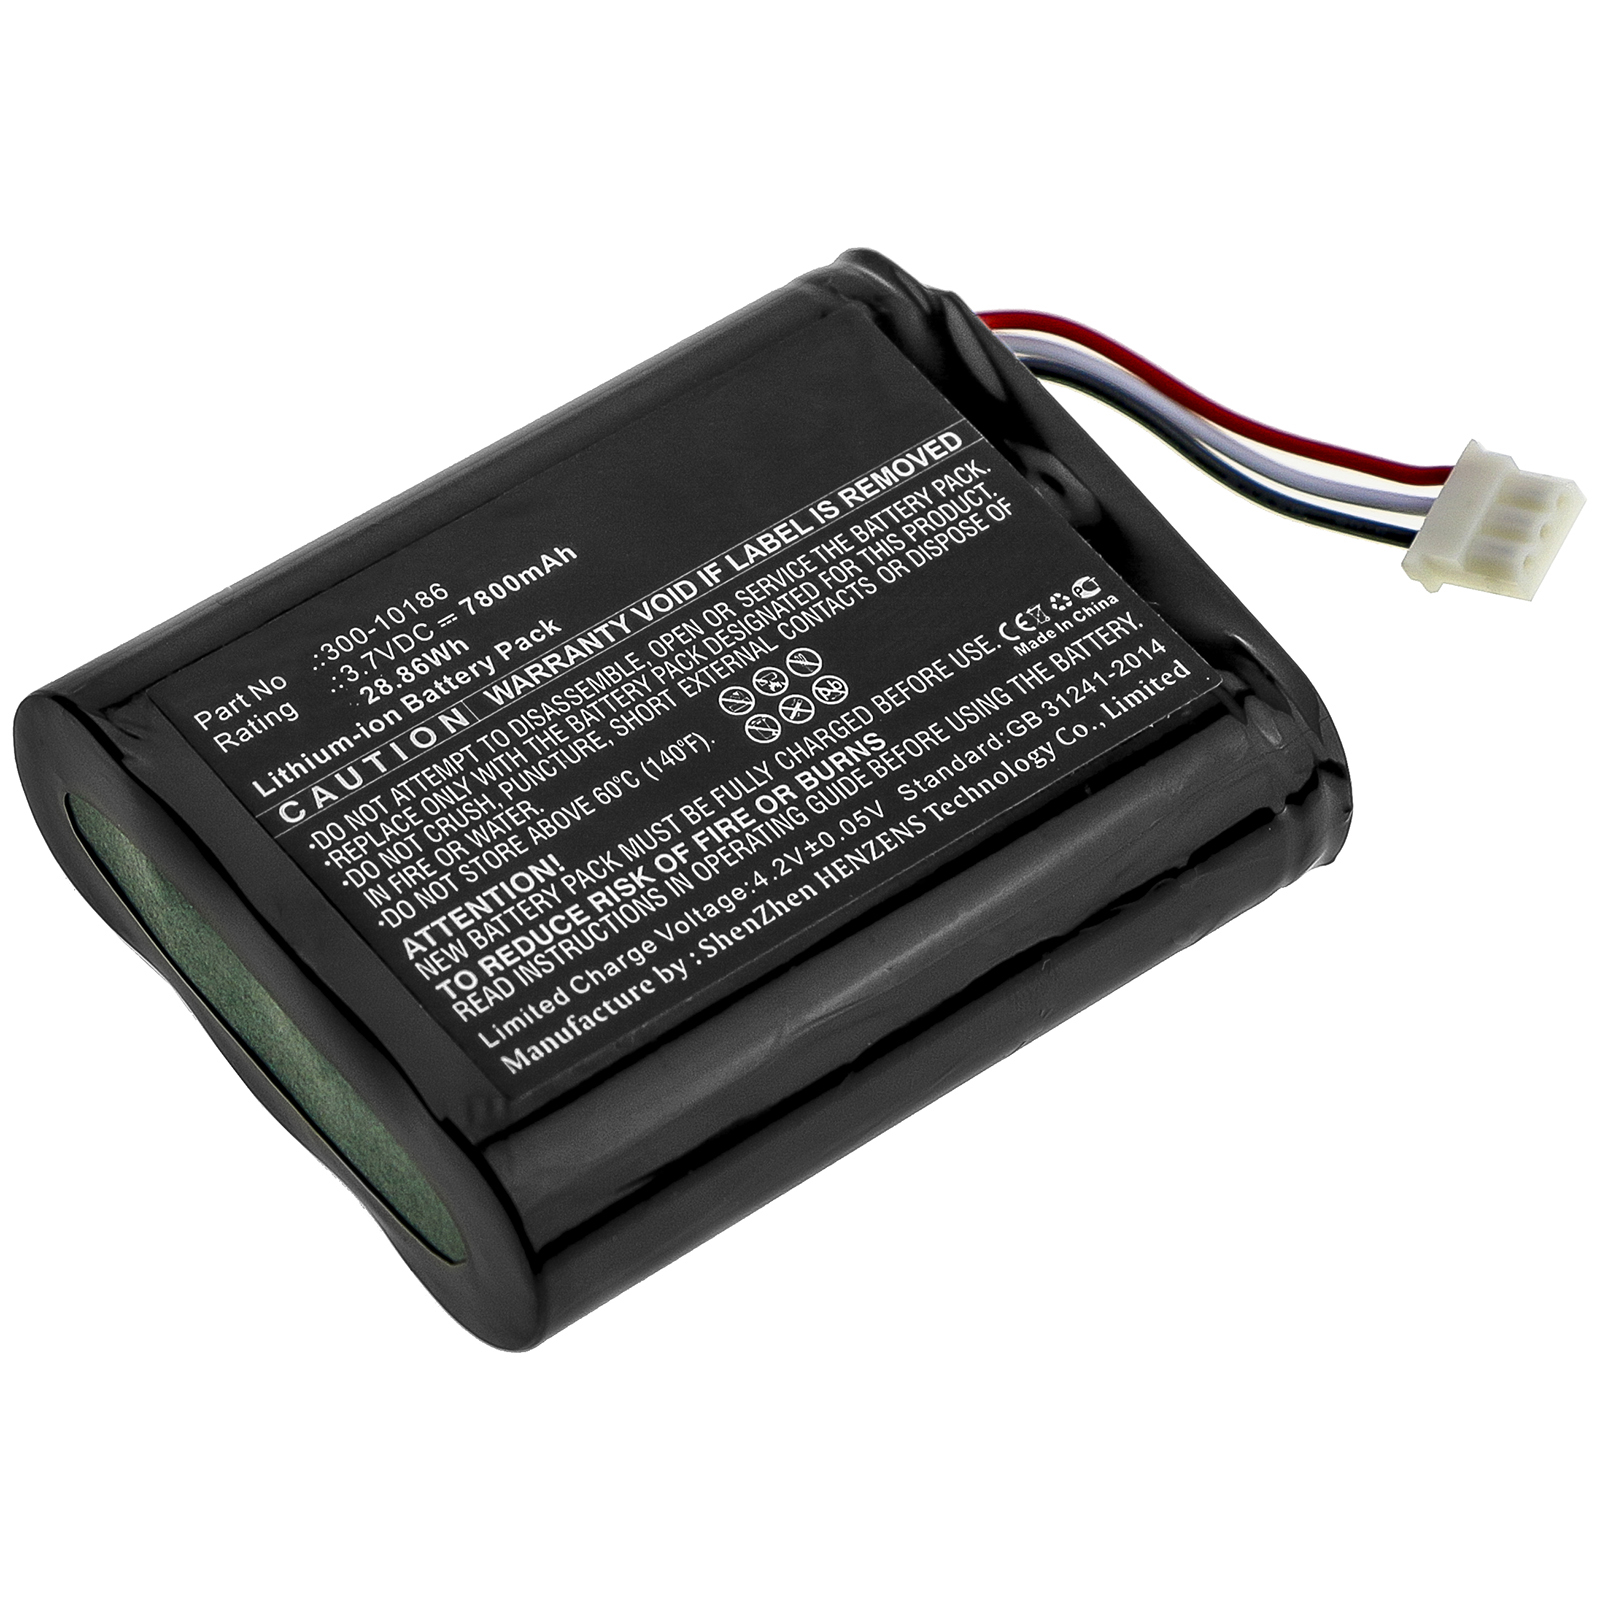 Synergy Digital Alarm System Battery, Compatible with Honeywell 300-10186 Alarm System Battery (3.7V, Li-ion, 7800mAh)